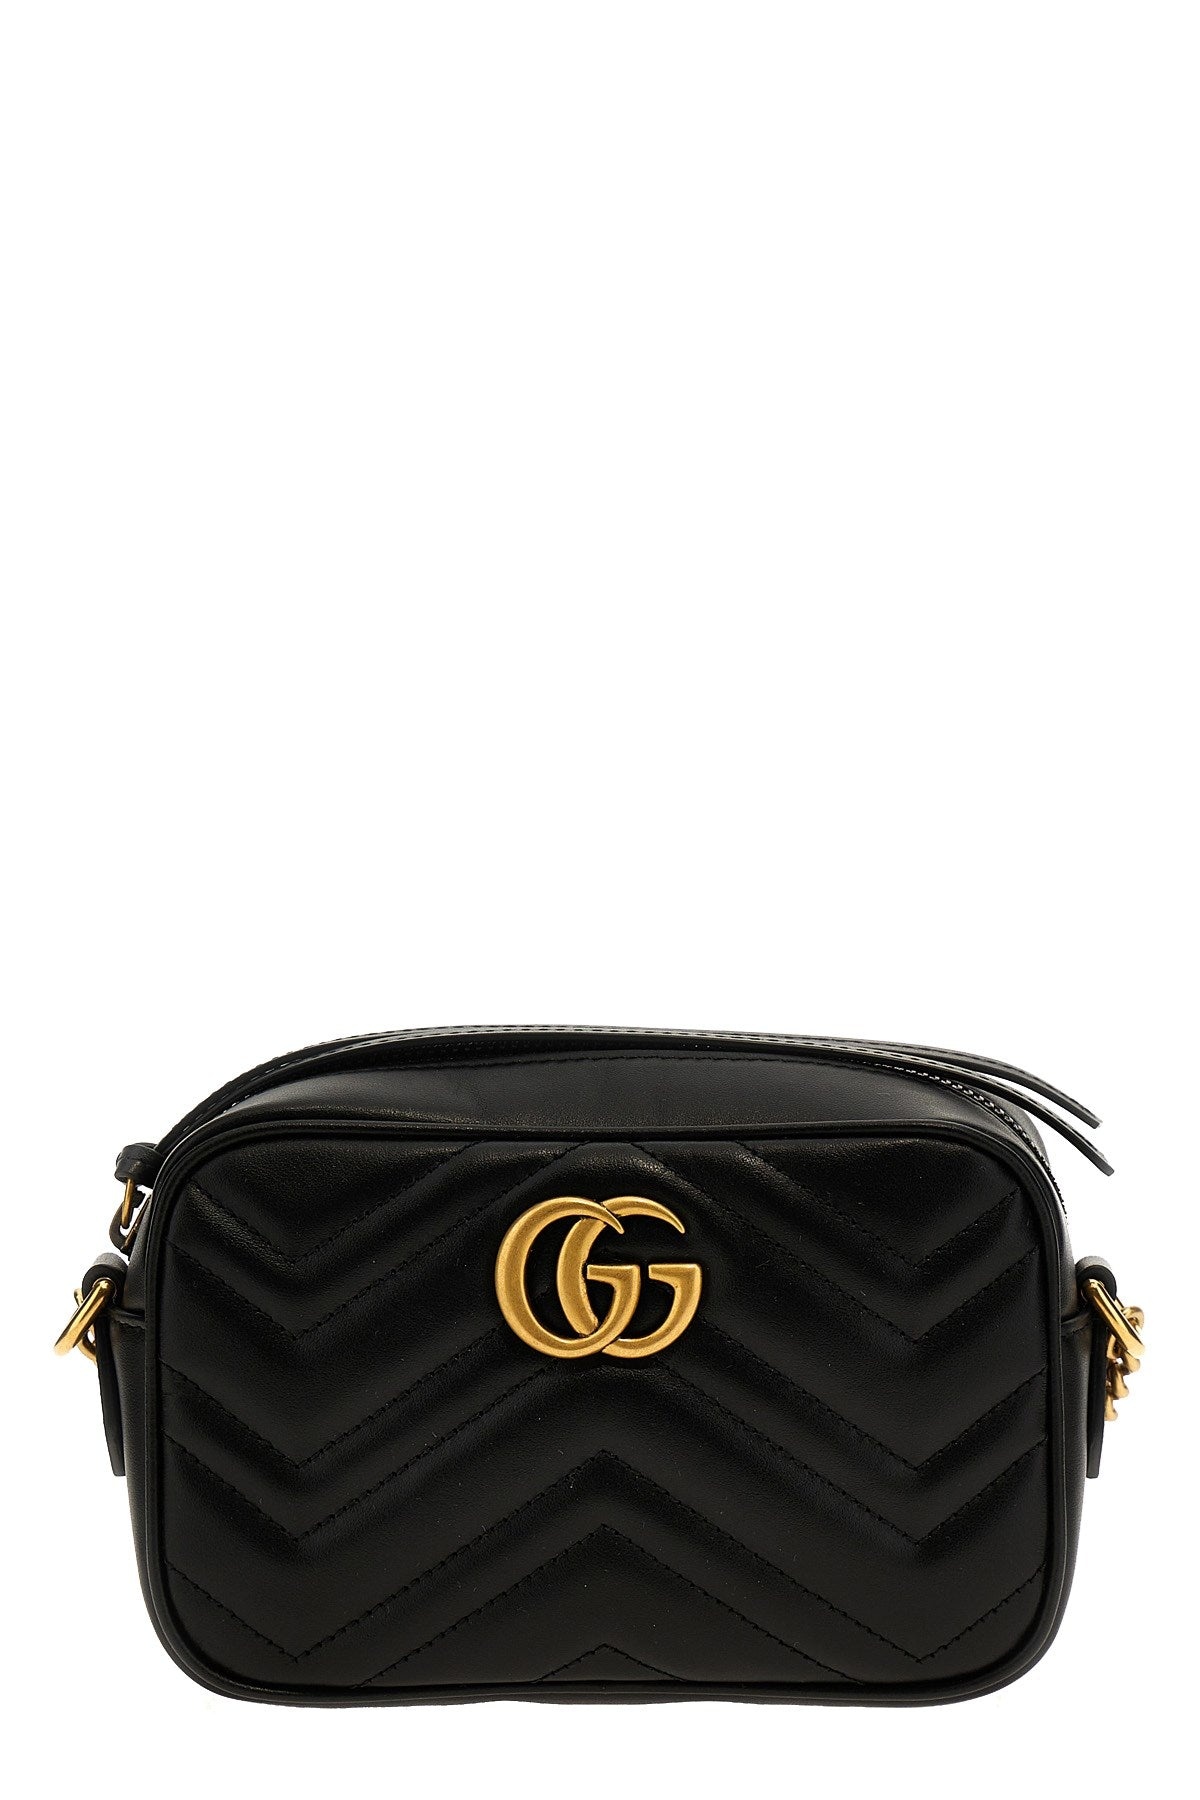 Gucci Women 'Gg Marmont 2.0' Crossbody Bag - 1